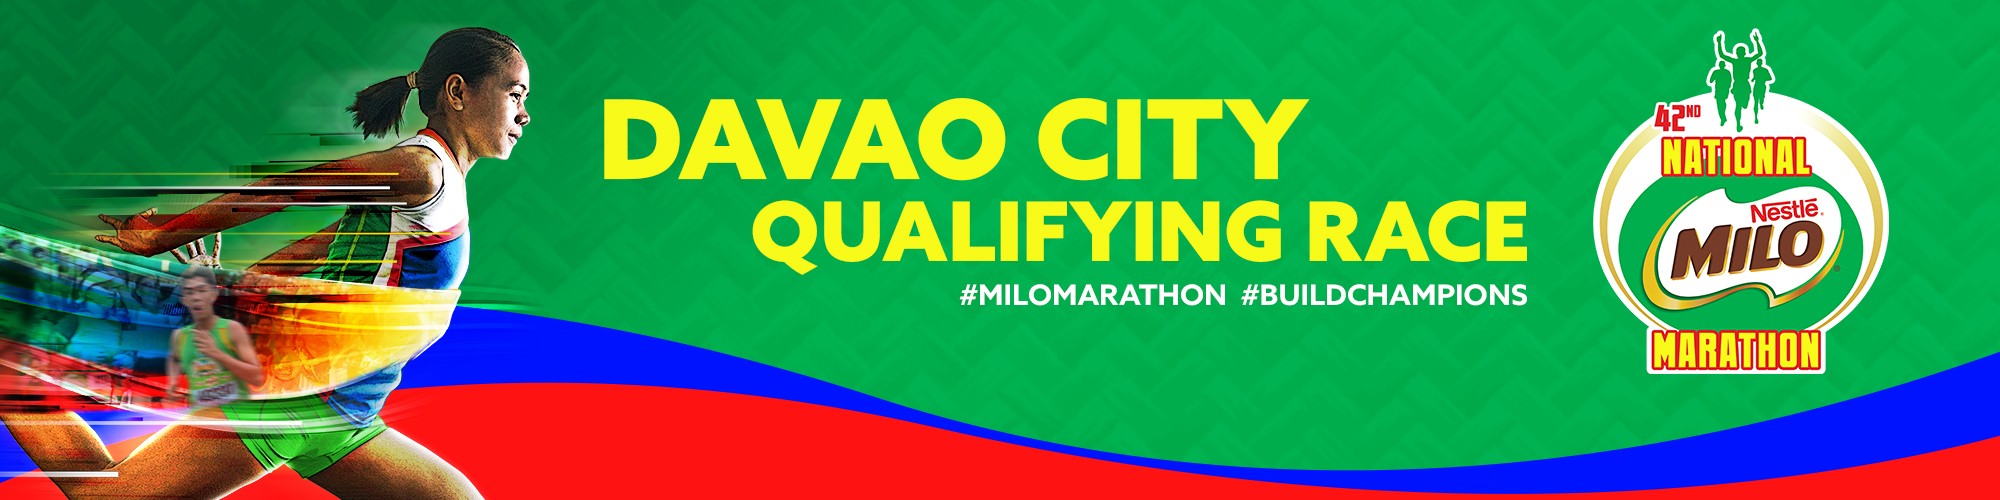 2019 National MILO Marathon Davao City